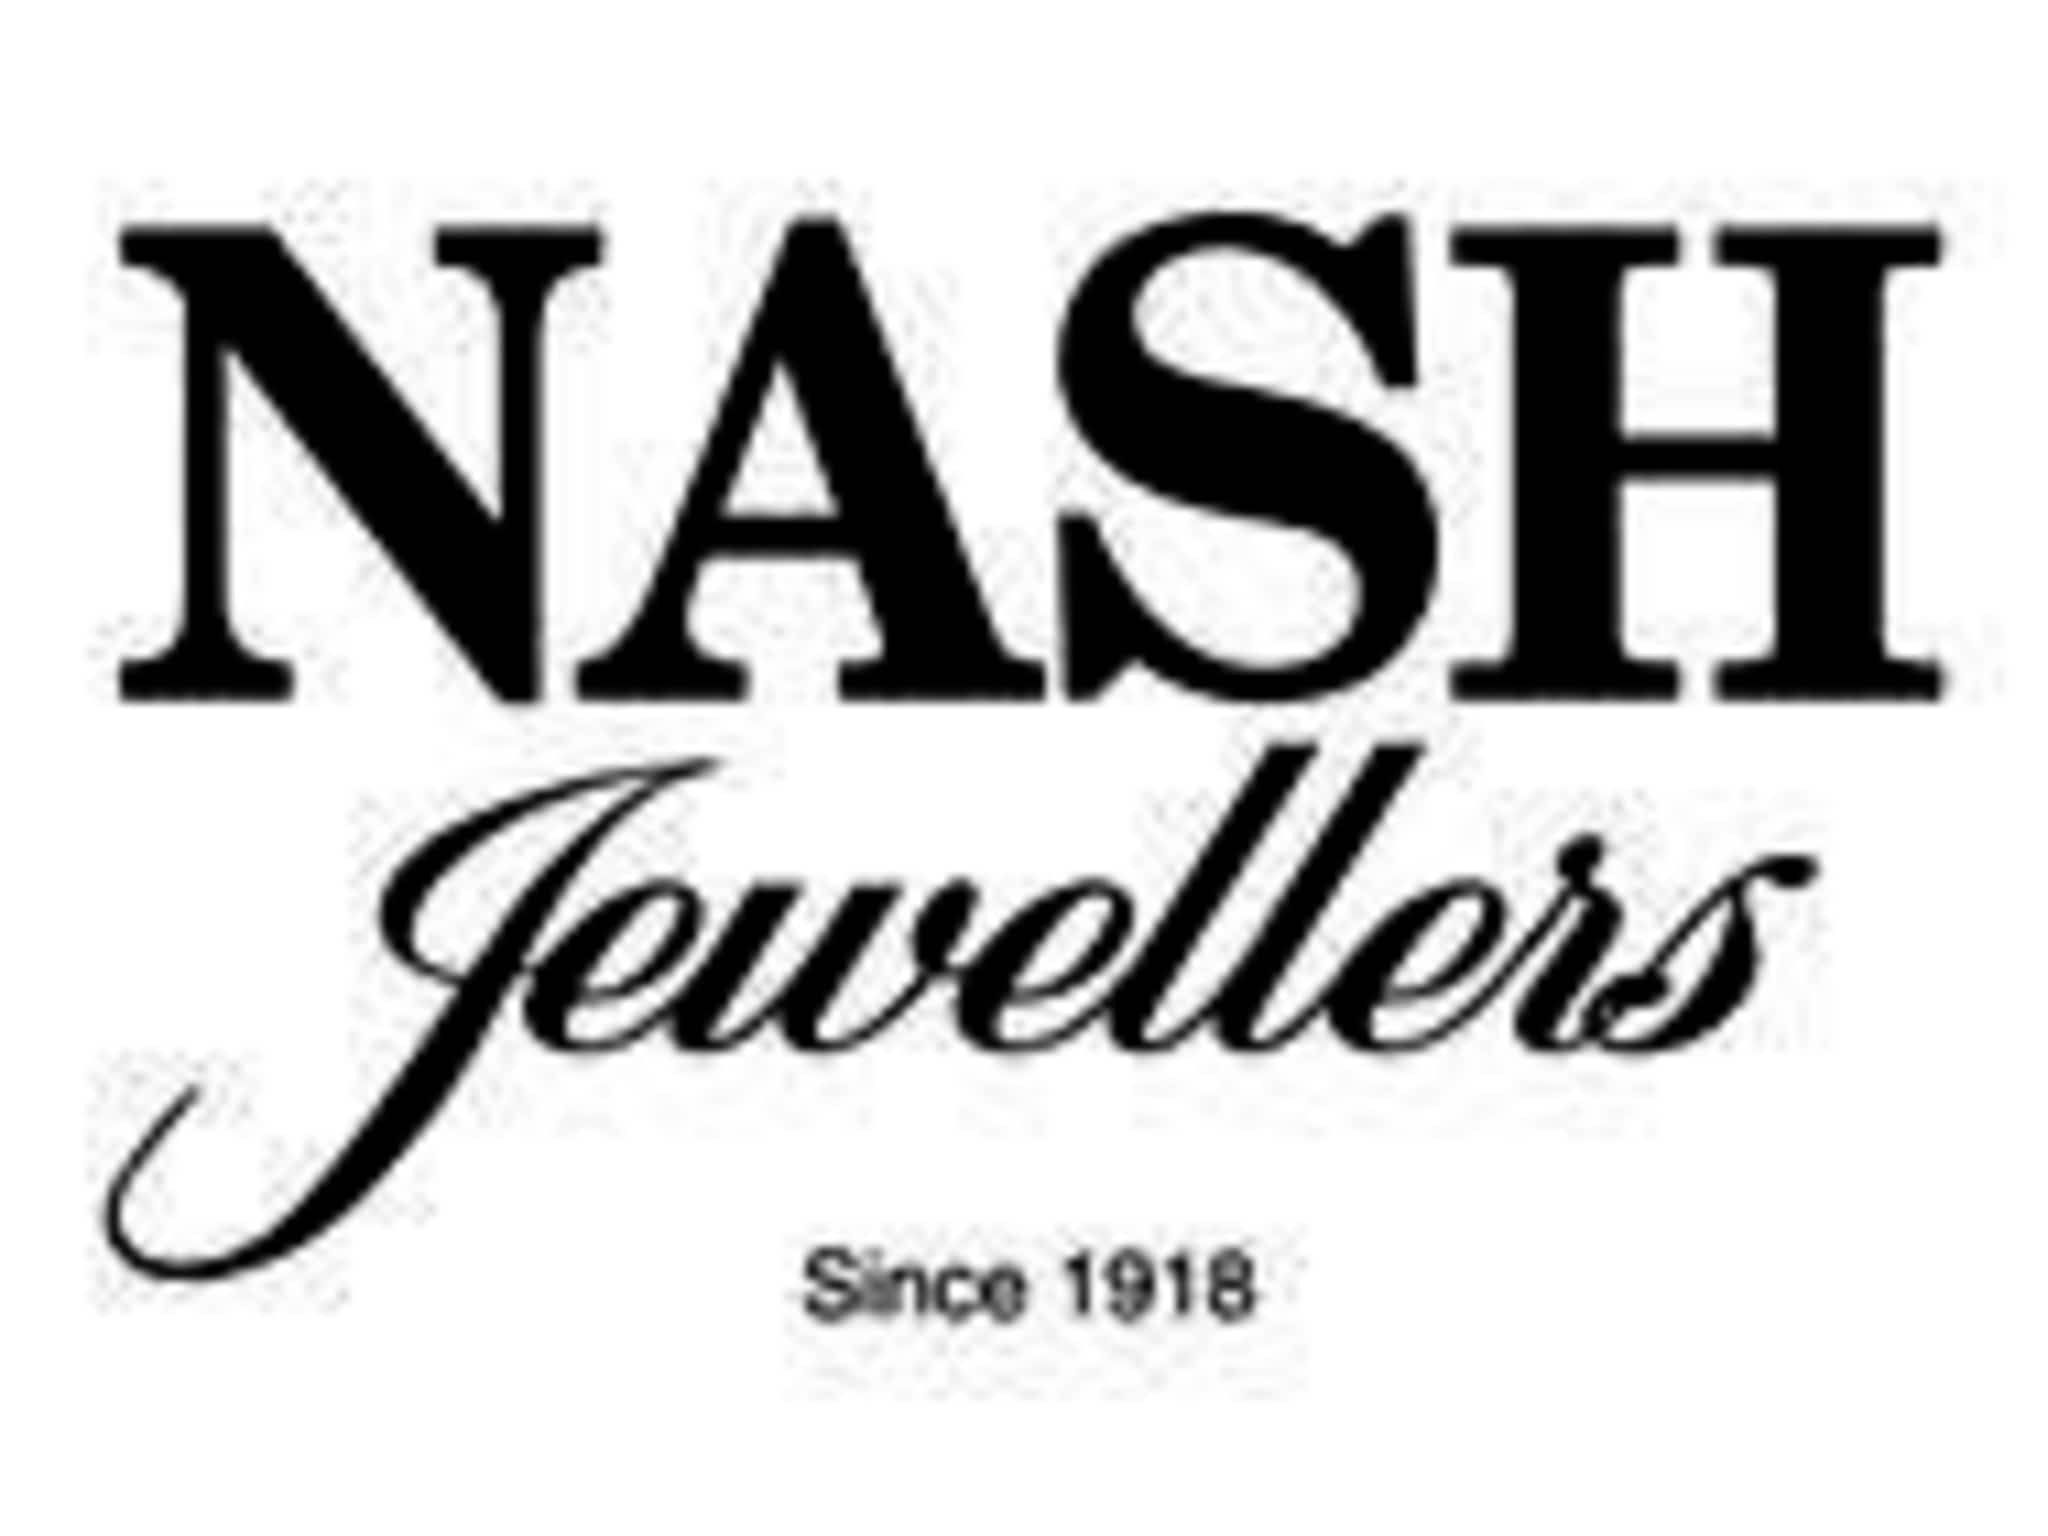 photo ?Nash Jewellers? - Official Rolex Retailer